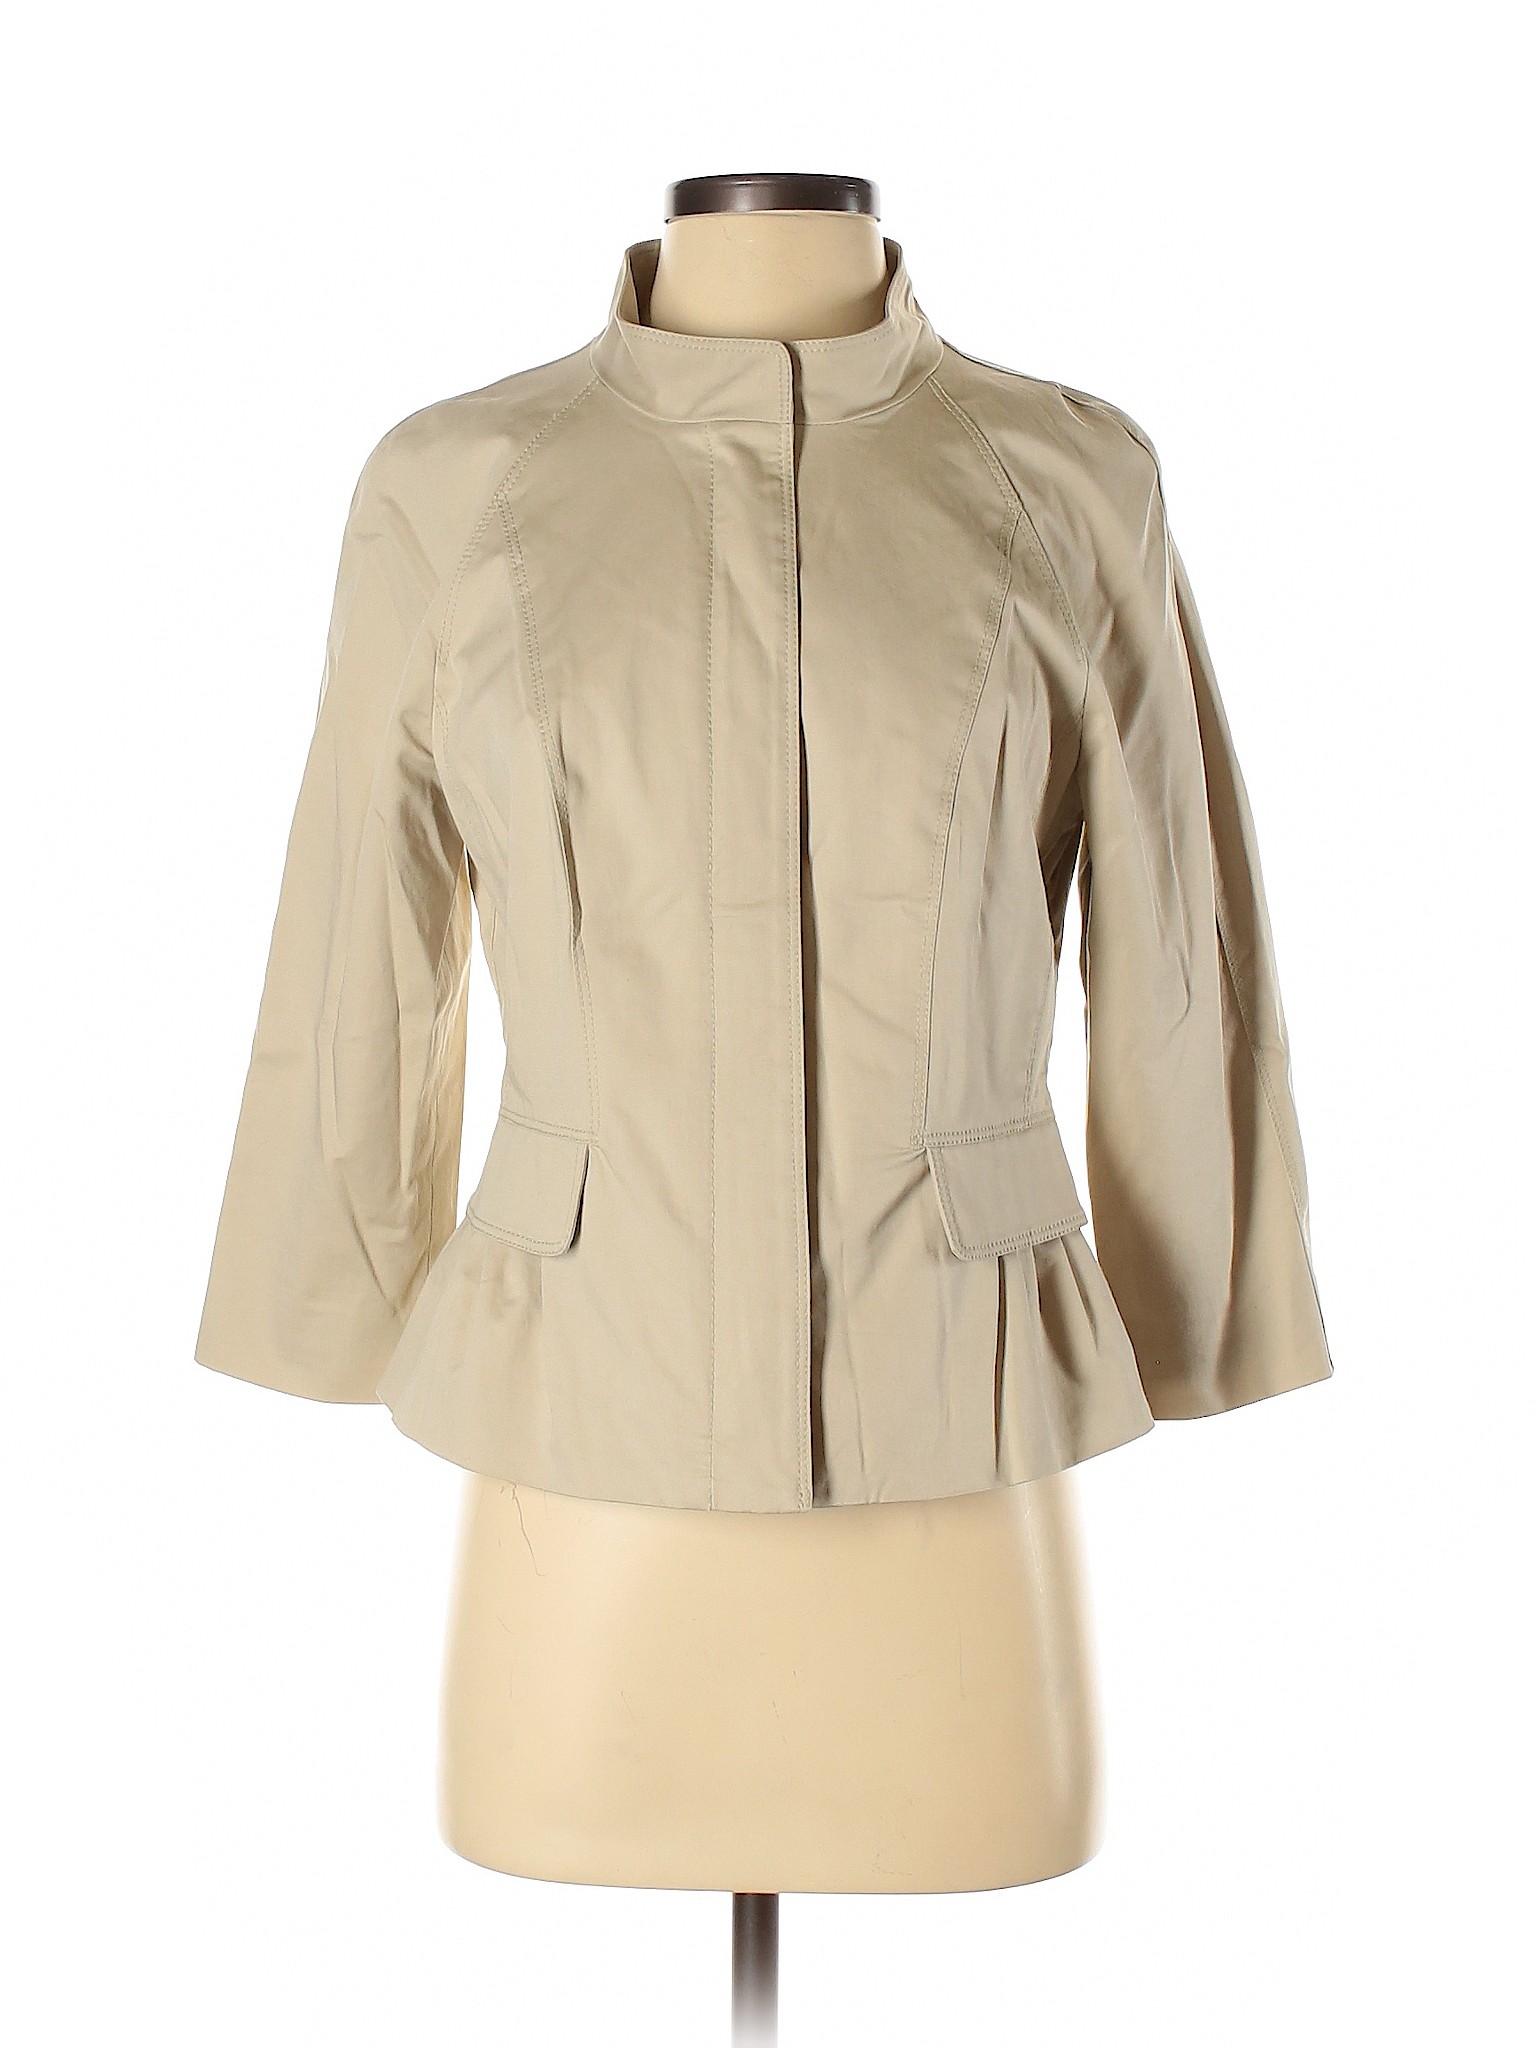 Kenneth Cole New York Women Brown Jacket 4 | eBay